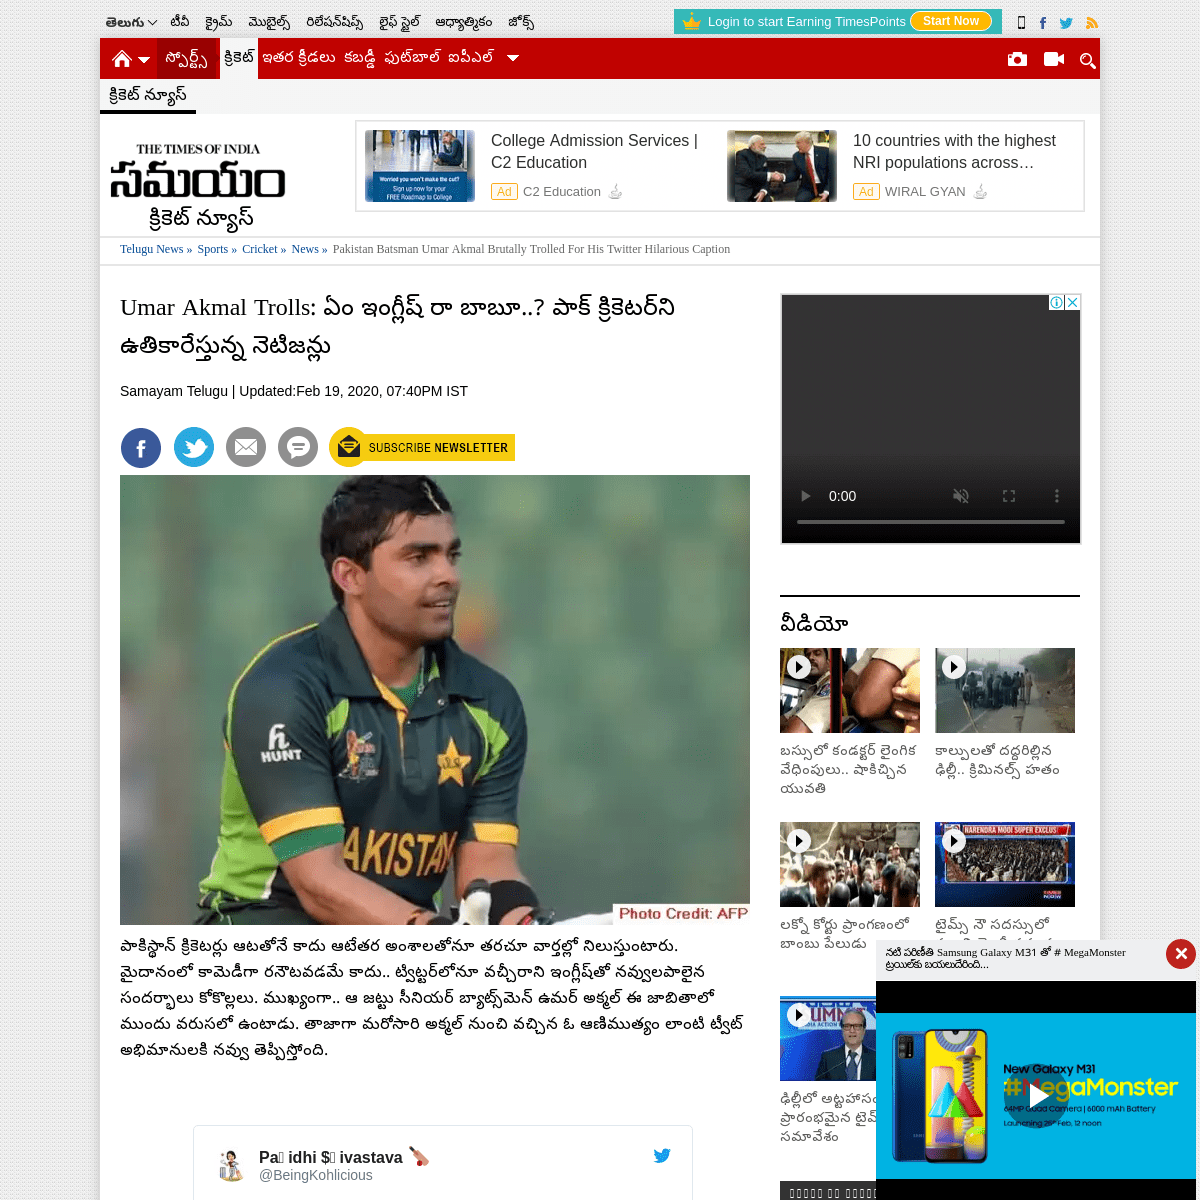 A complete backup of telugu.samayam.com/sports/cricket/news/pakistan-batsman-umar-akmal-brutally-trolled-for-his-twitter-hilario